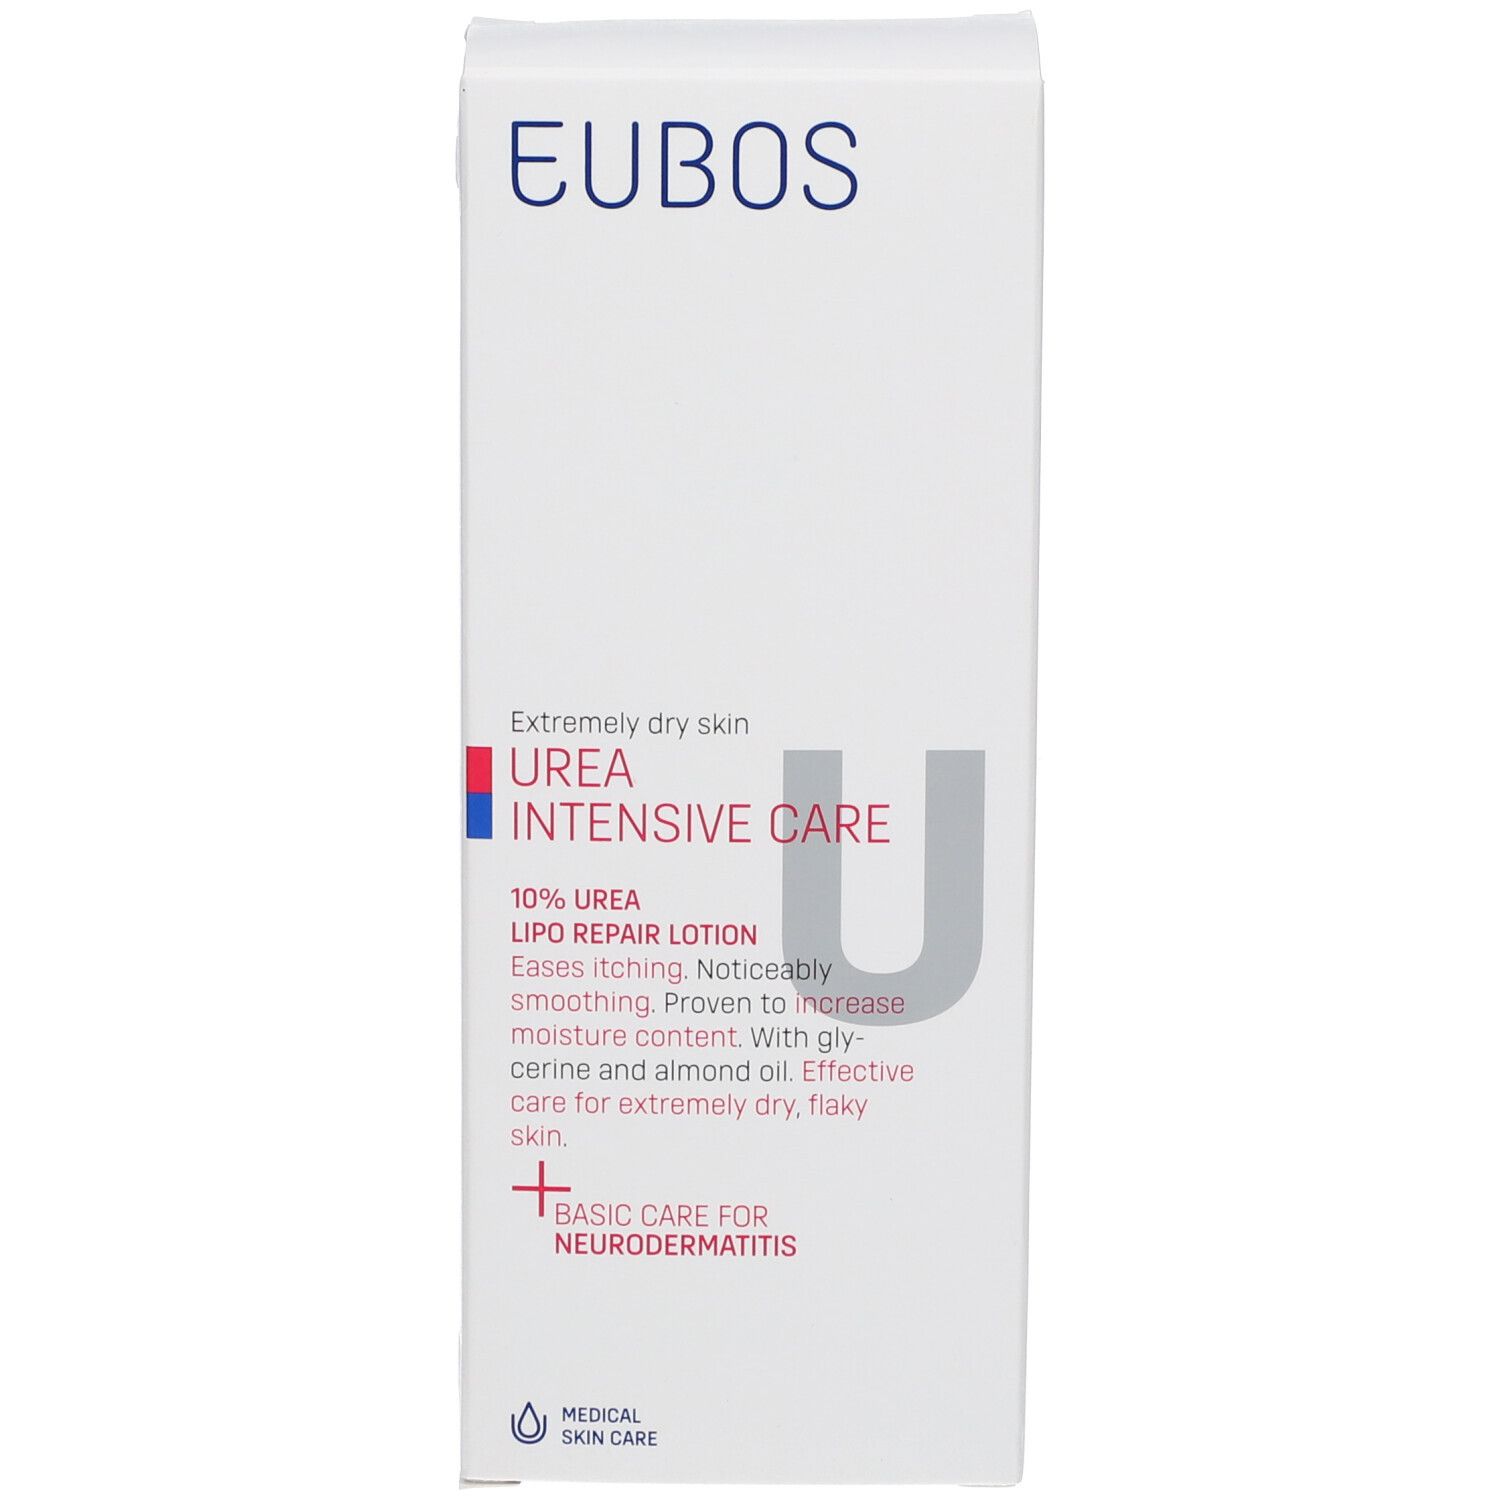 EUBOS 10% Urea Lipo Repair Lotion